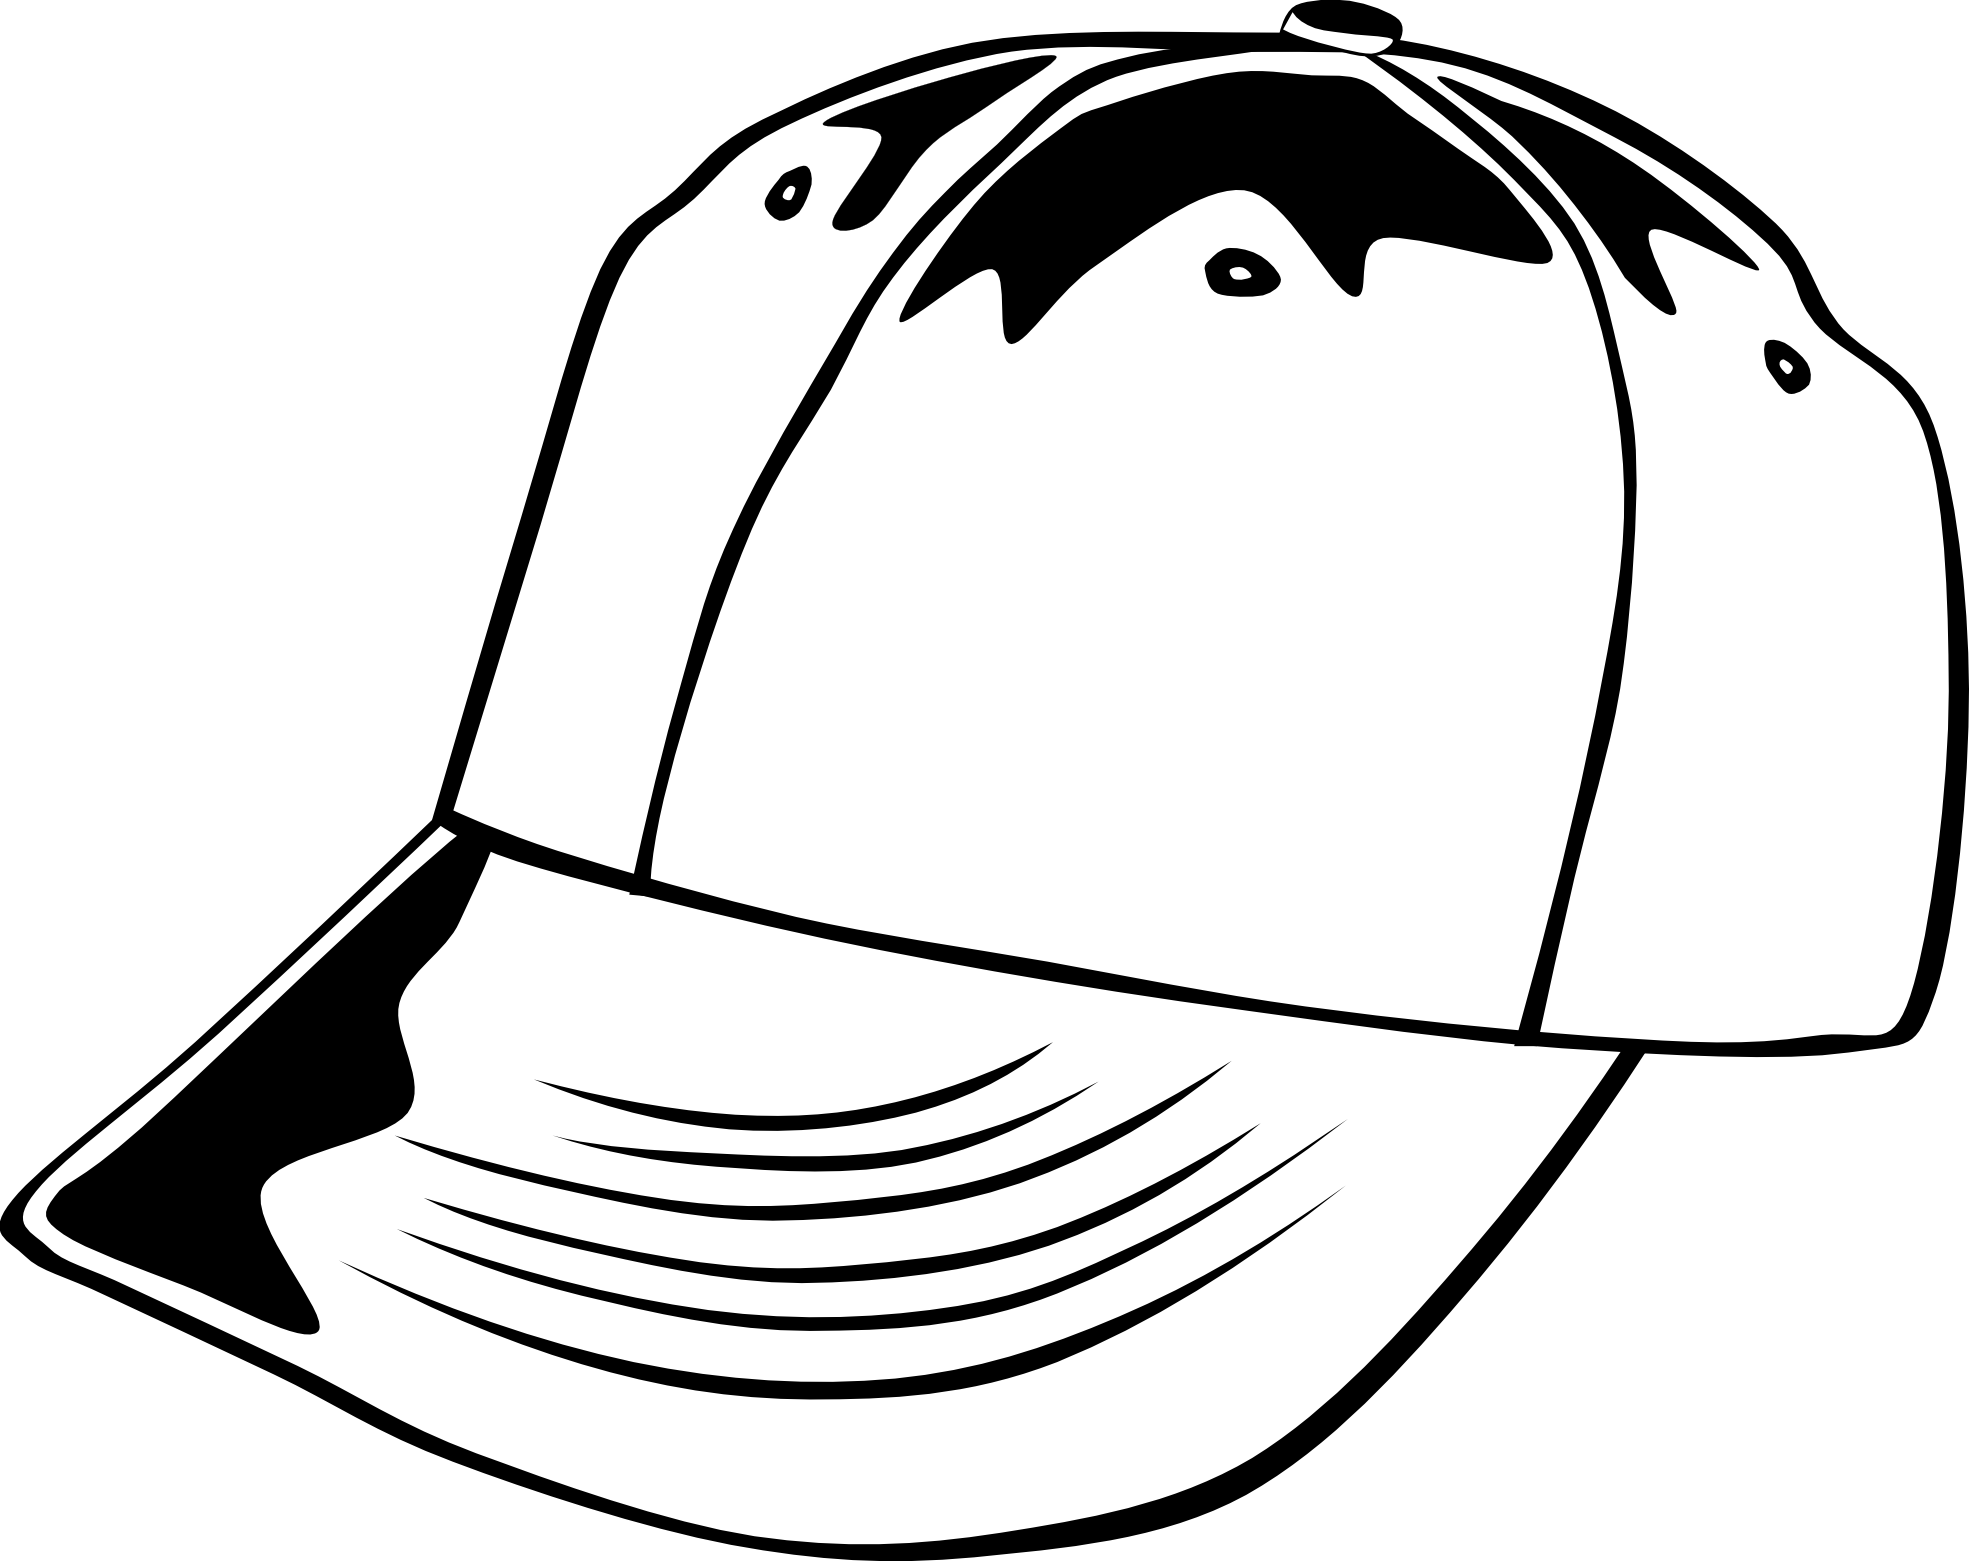 Baseball hat image of baseball cap clipart 1 hat free 2